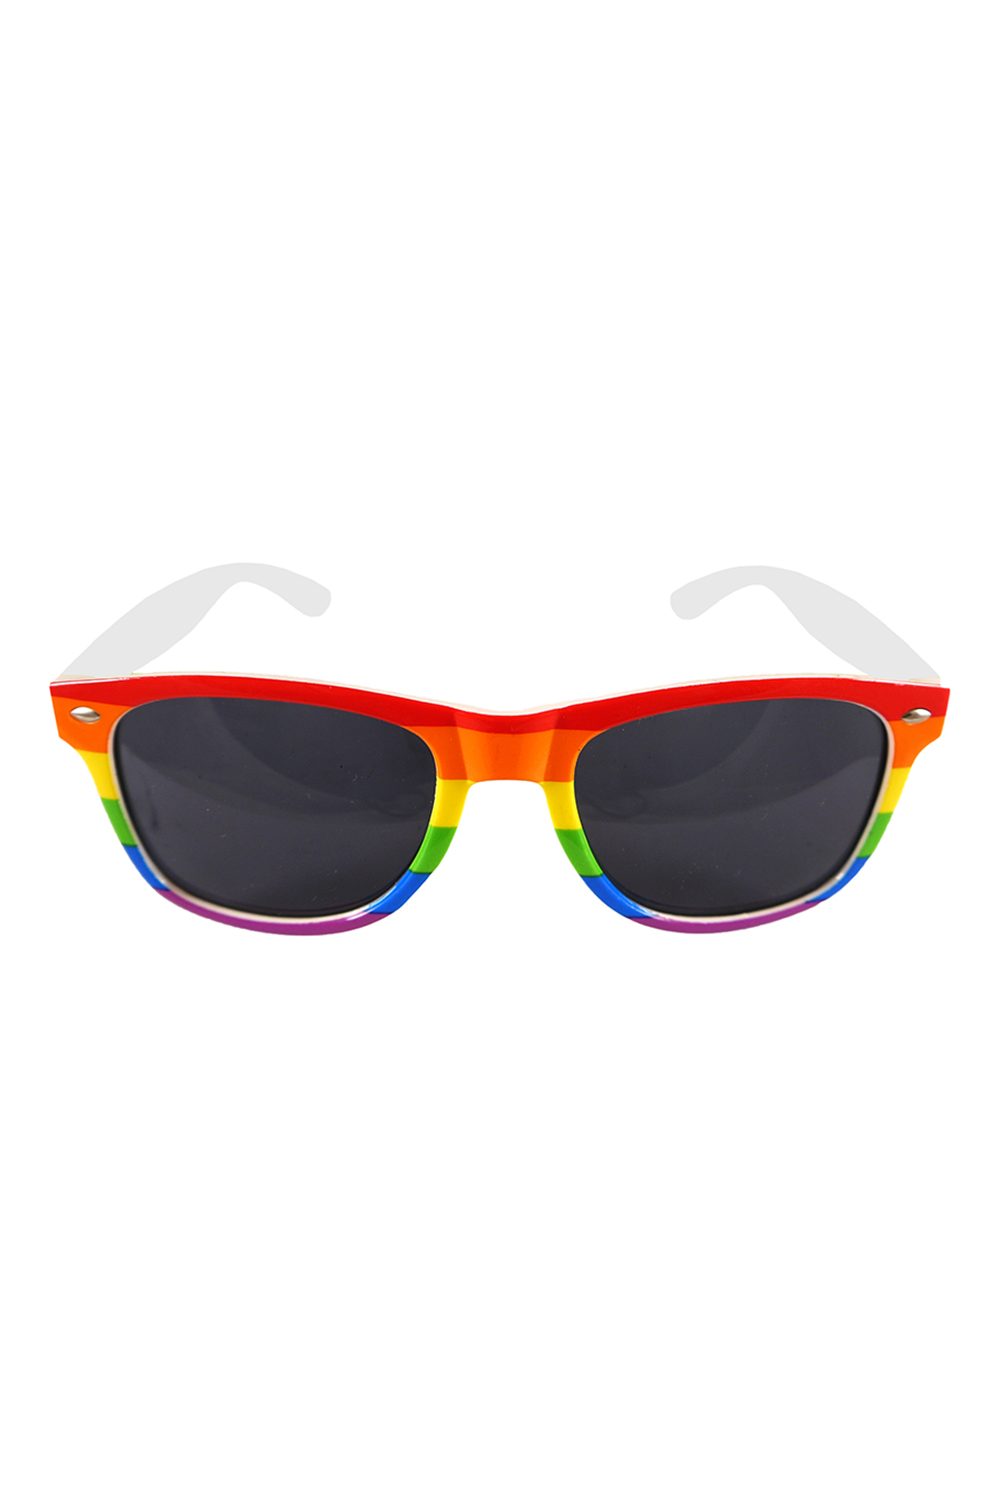 Wickedfun adult Rainbow dark lense glasses (Pack of 12)